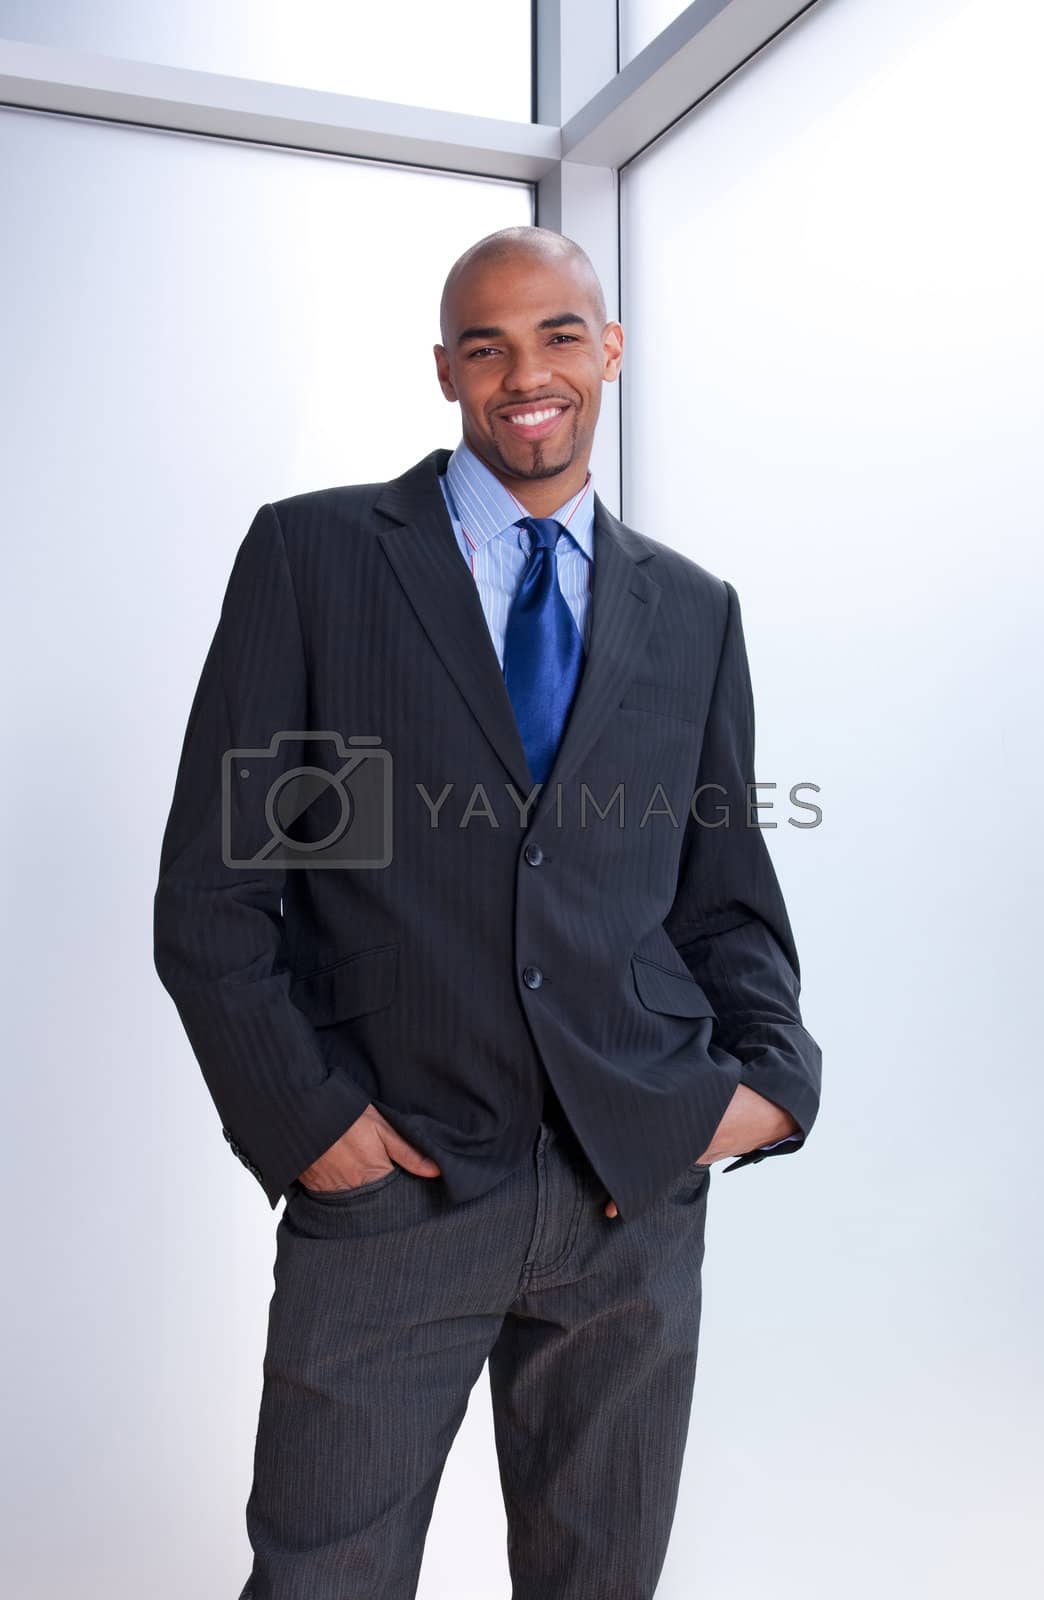 Royalty free image of Good-looking smiling businessman by anikasalsera